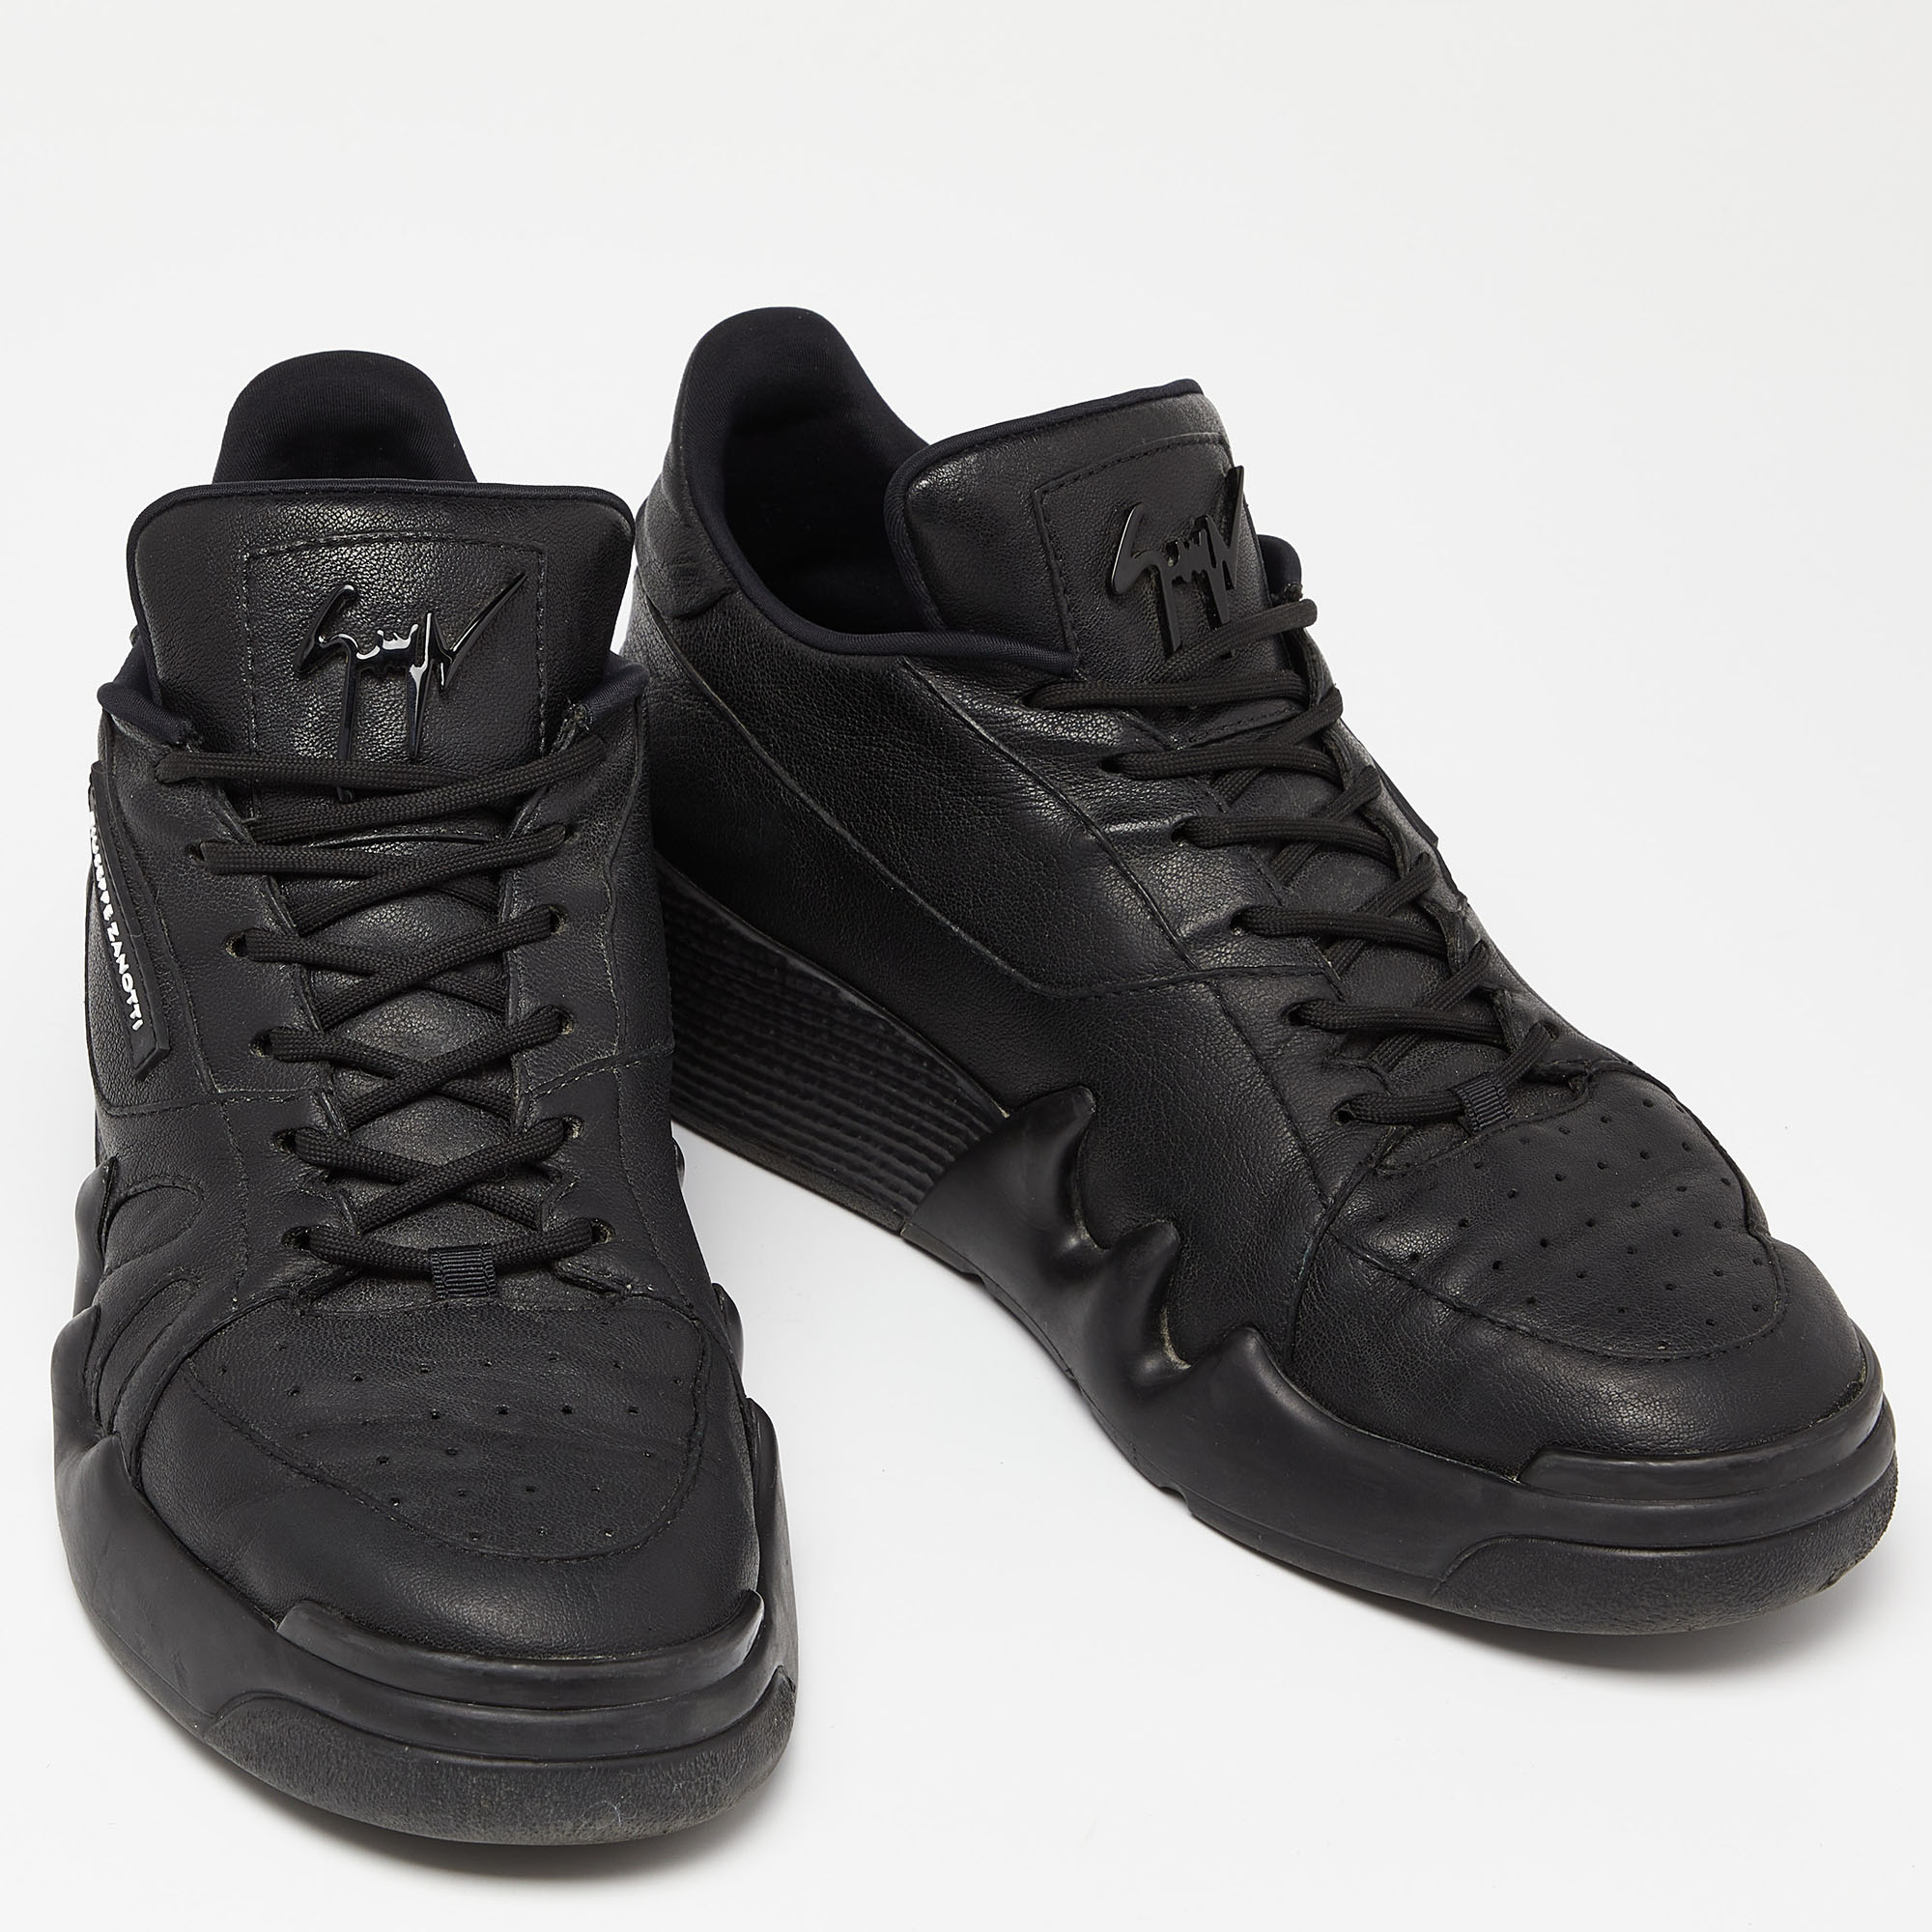 Giuseppe Zanotti Black Leather Talon Low Top Sneakers Size 44